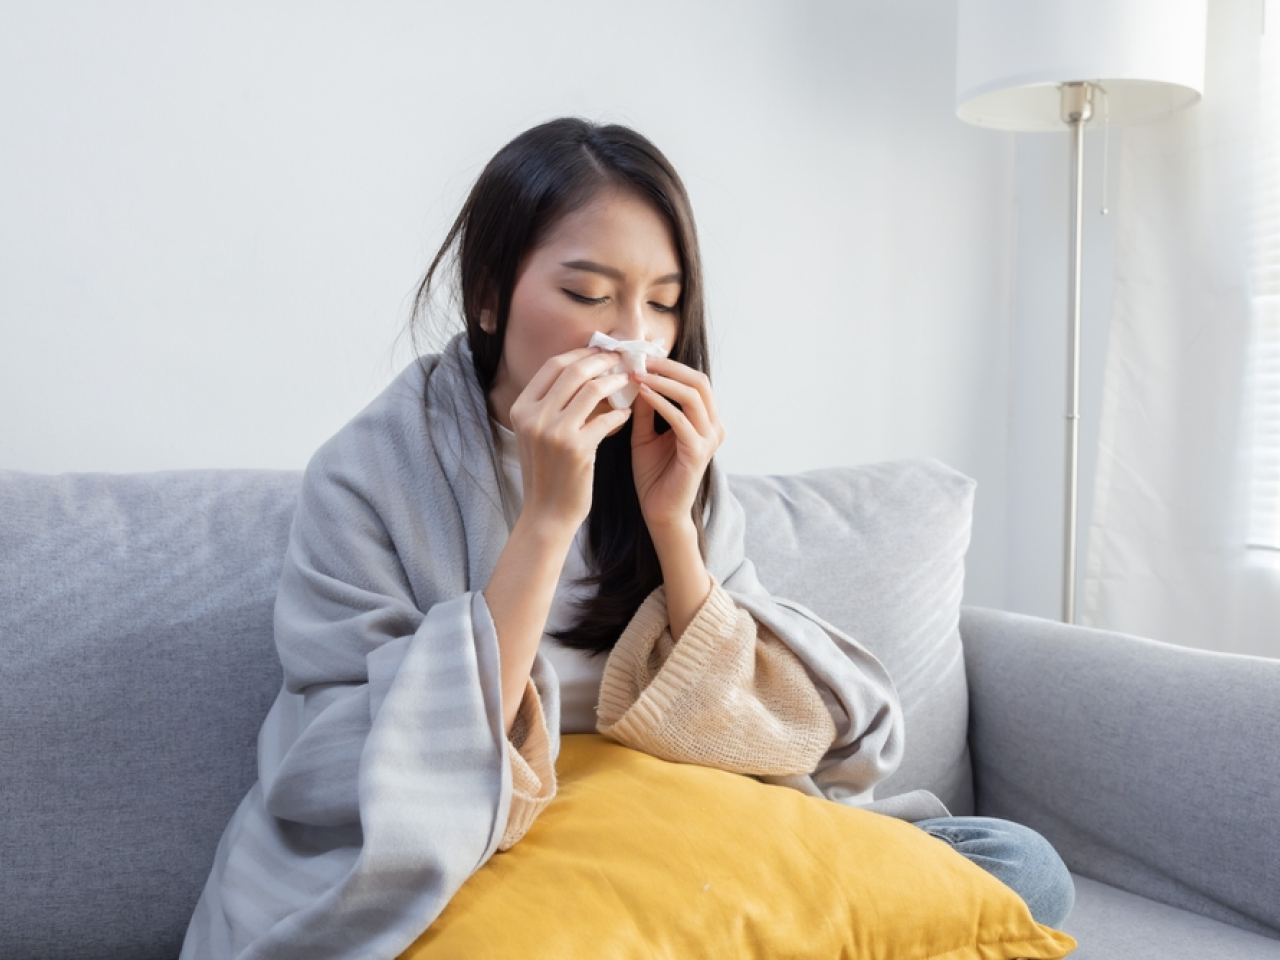 Loss of immunity extending flu season, HKU medic says